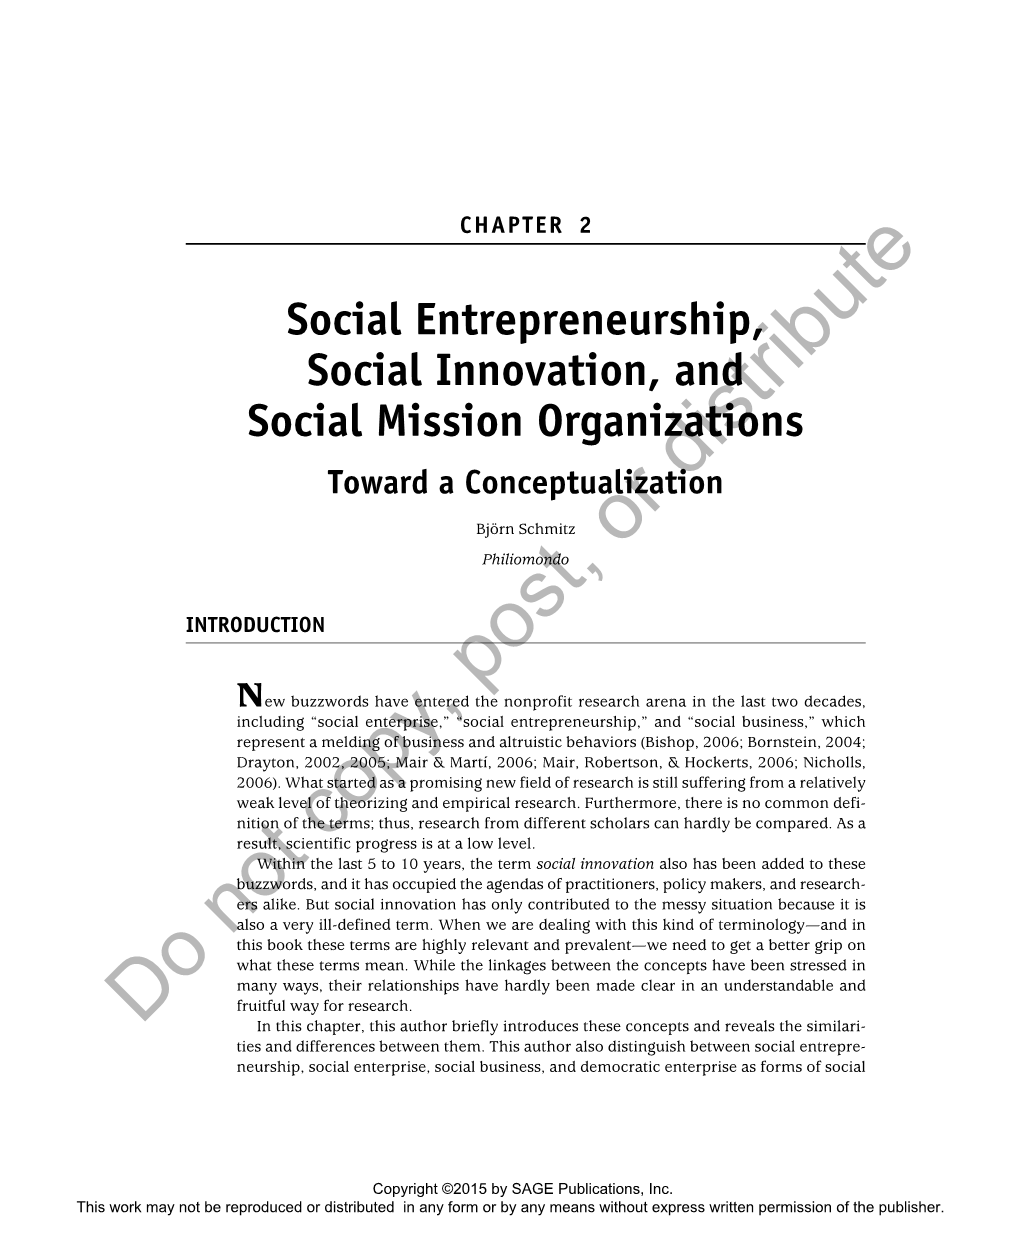 Social Entrepreneurship, Social Innovation, and Social Mission Organizations Toward a Conceptualizationdistribute